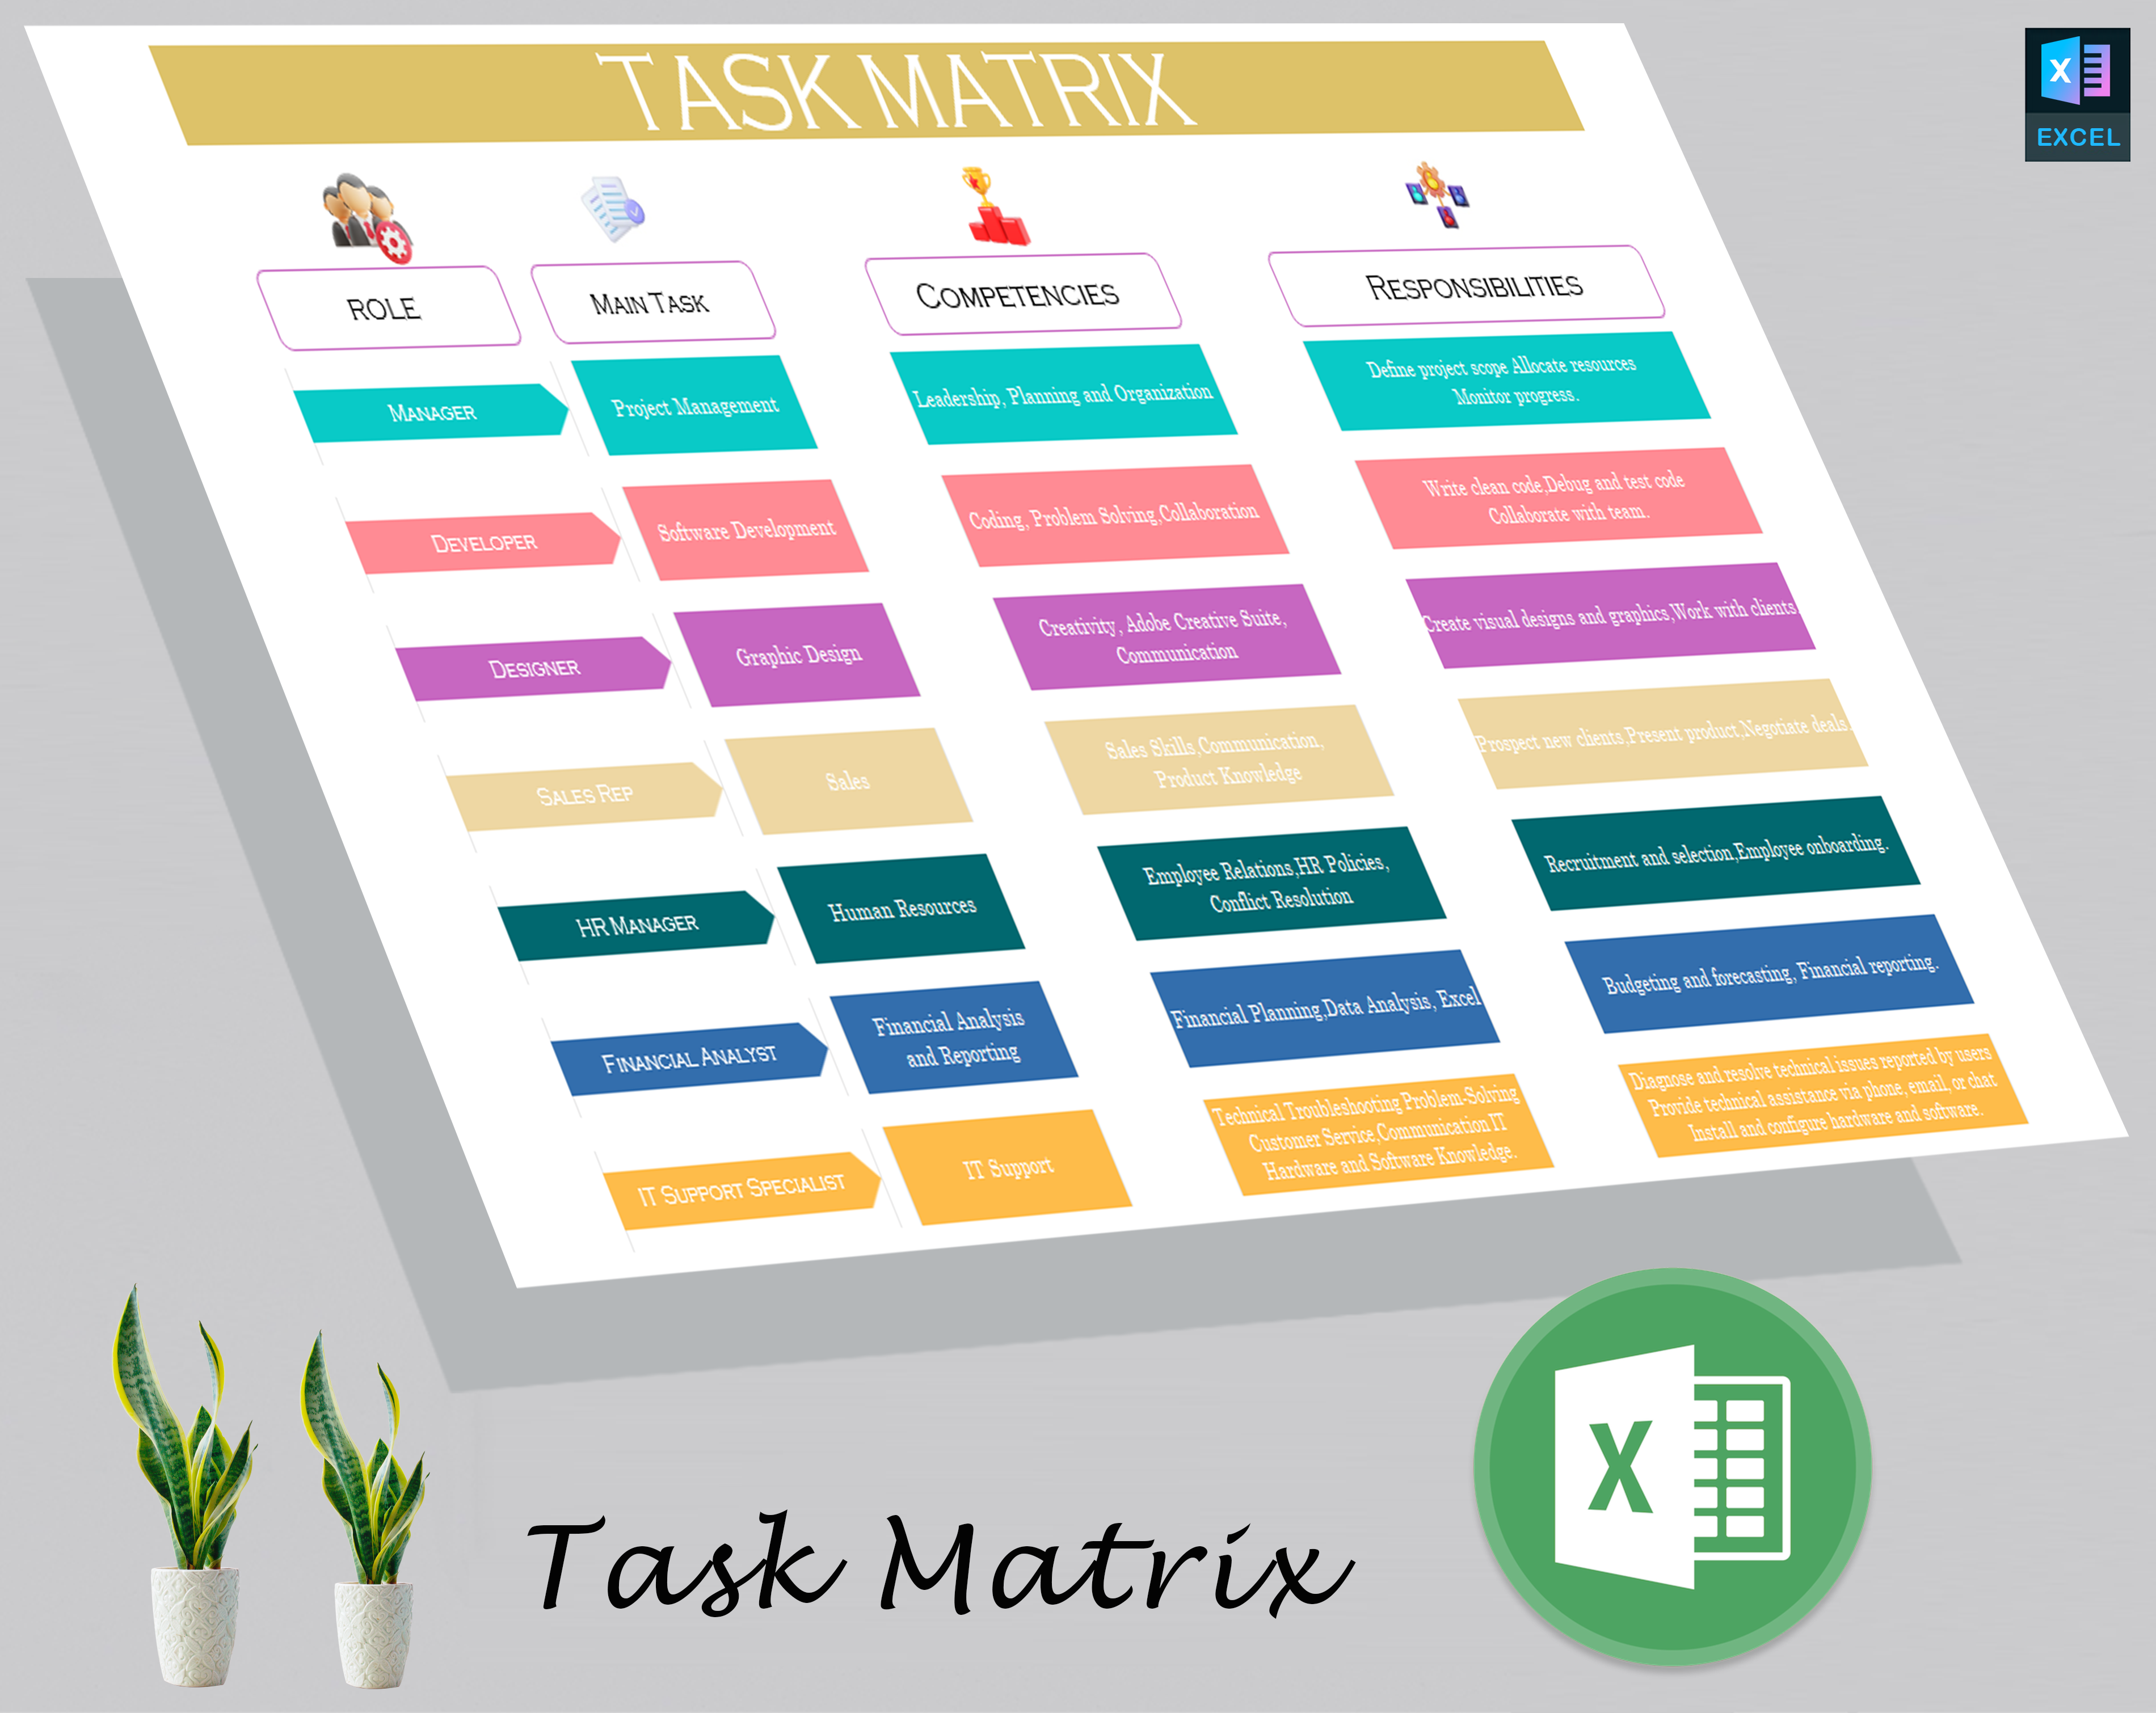 Task matrix